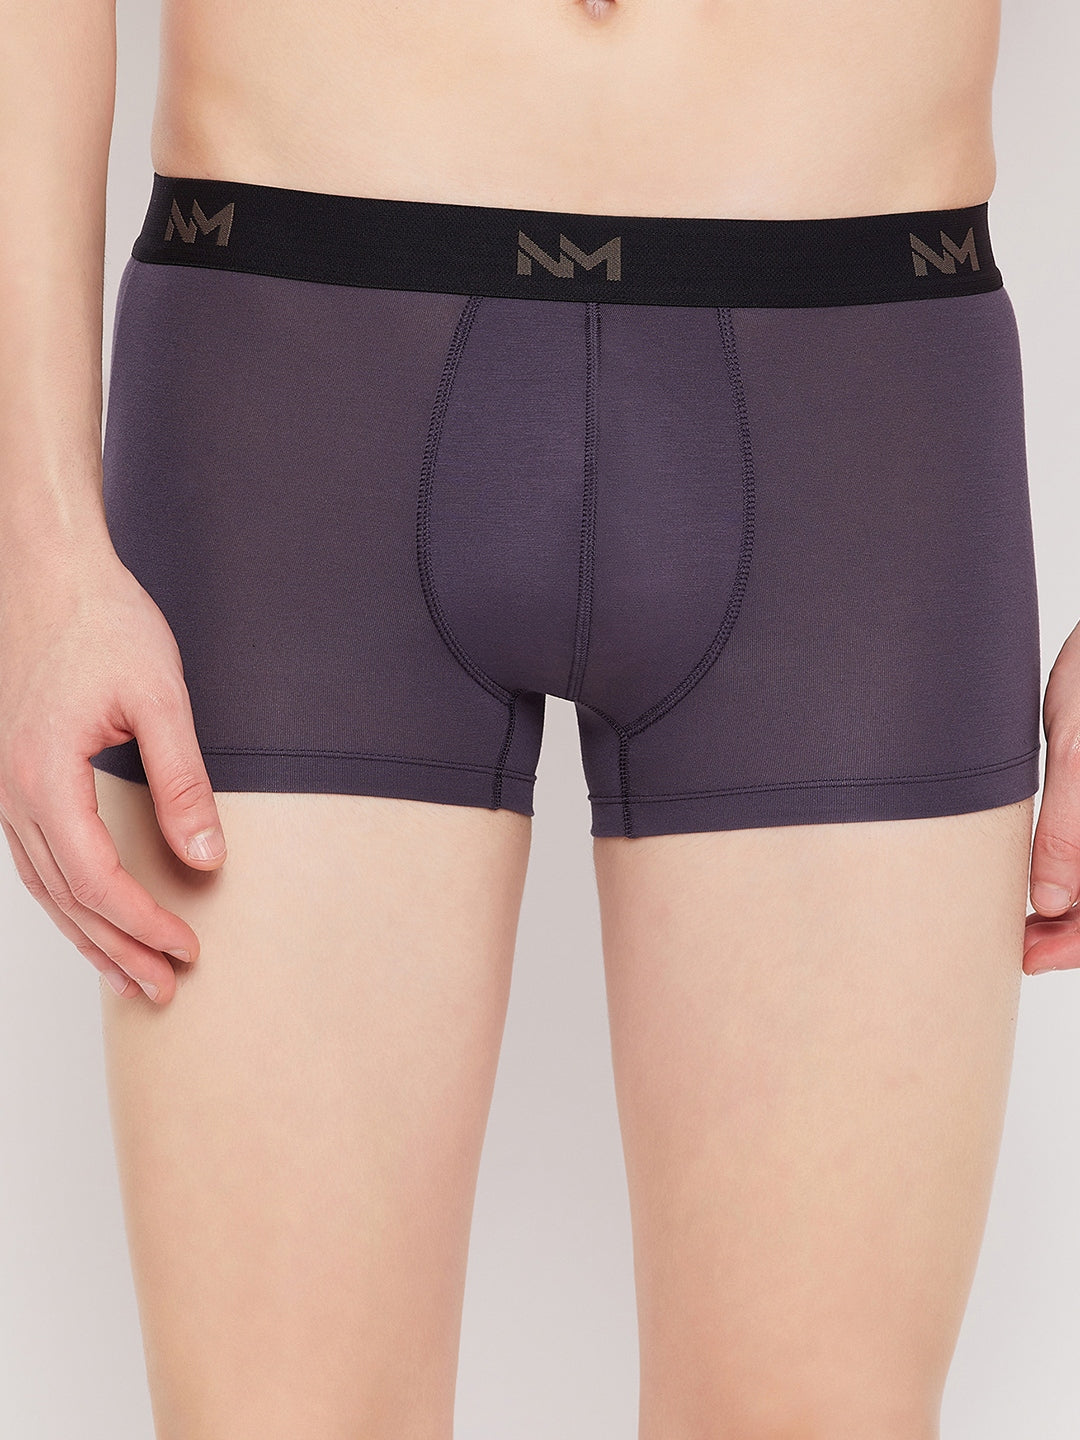 Neva Modal Solid Ultra Short Trunk Underwear for Men- Blue, Olive, Steel Grey Collection (Pack of 3)